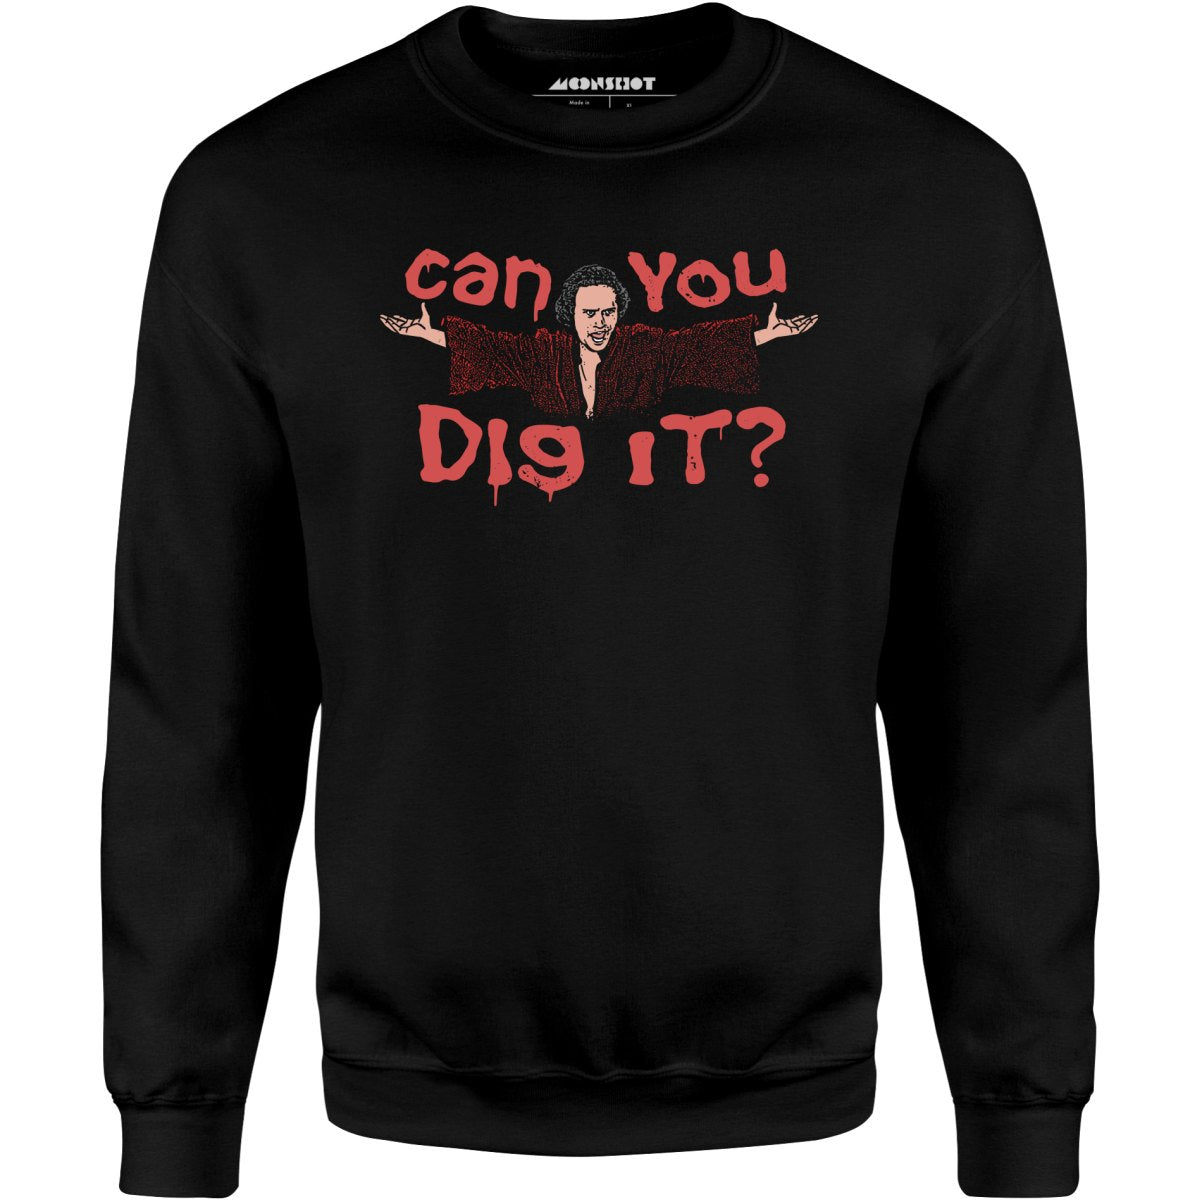 Can You Dig It? - Unisex Sweatshirt